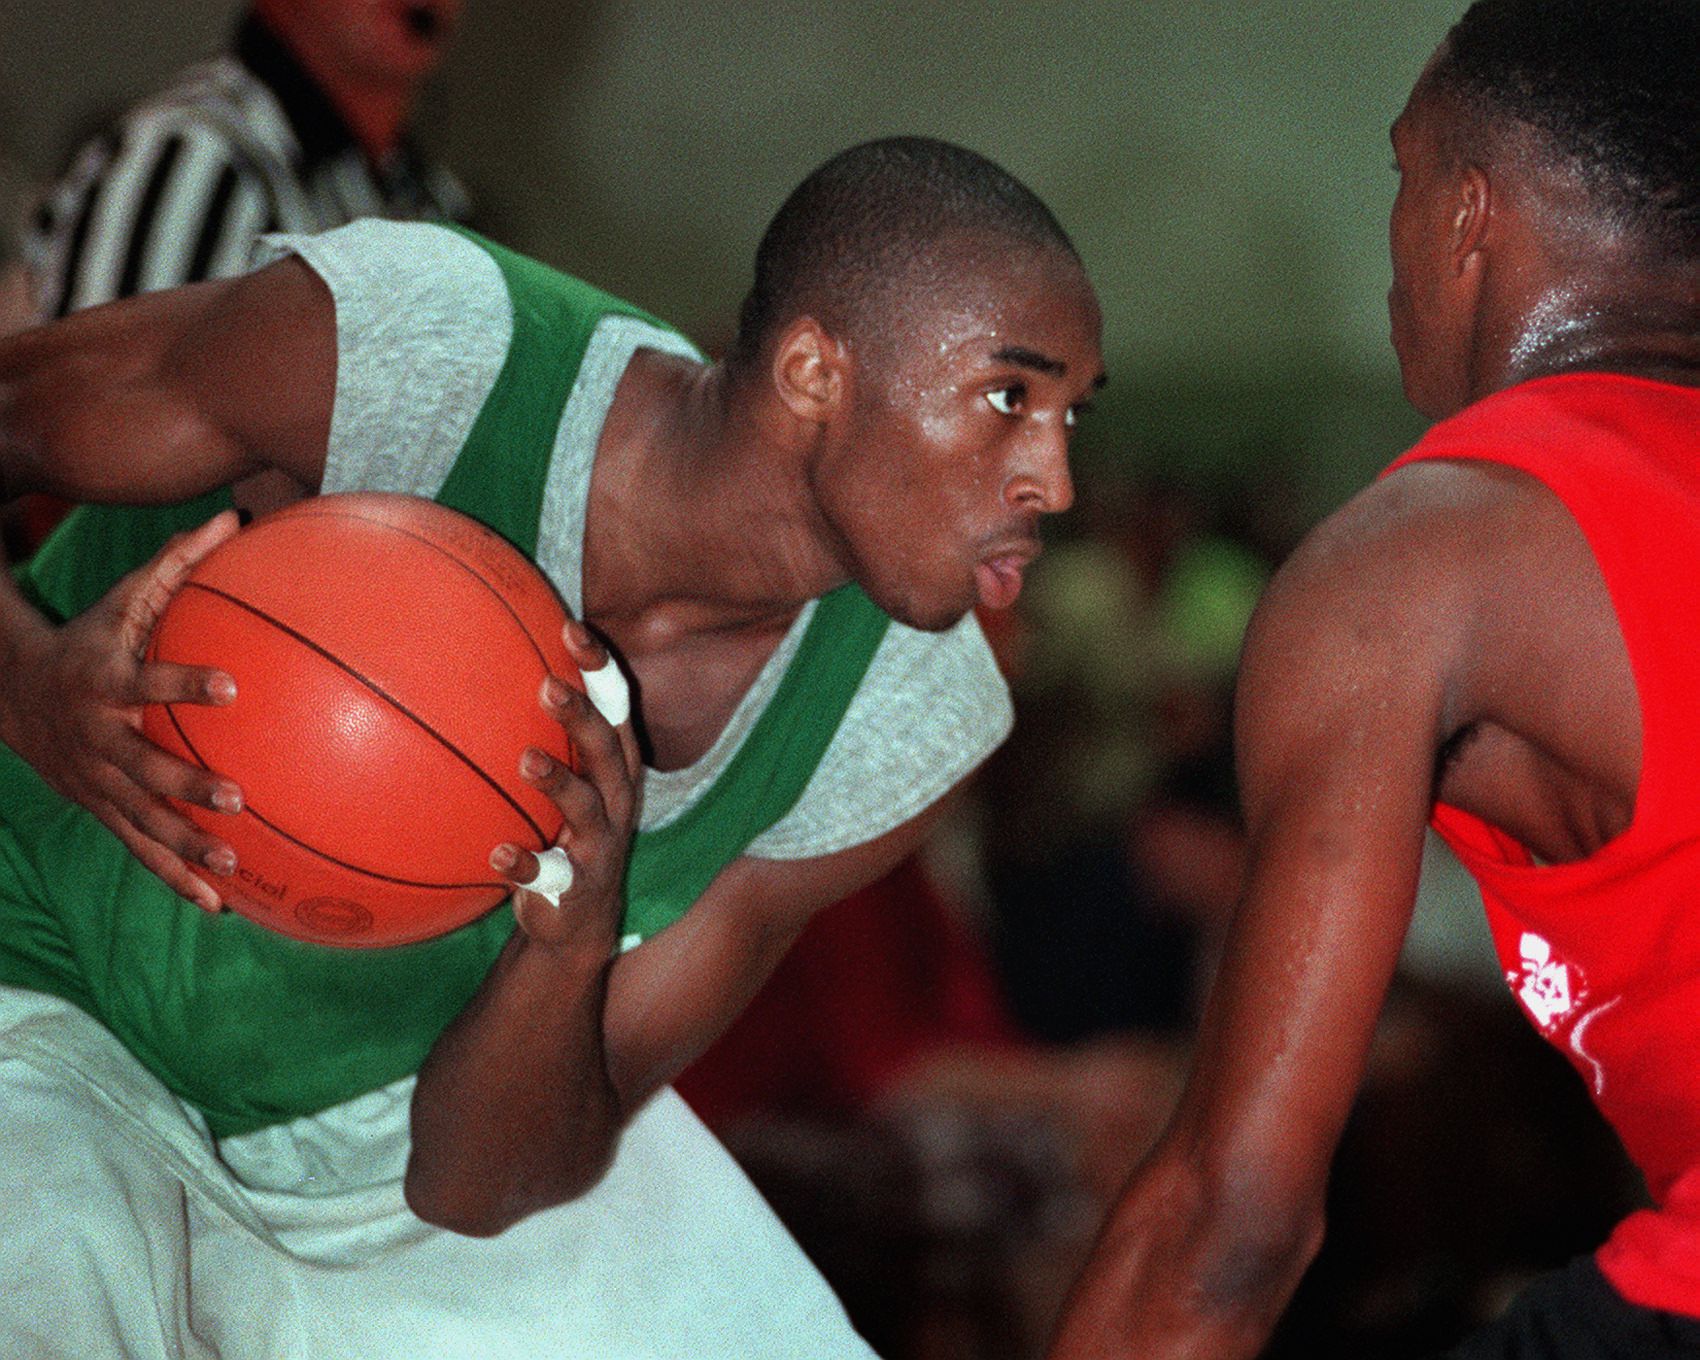 Kobe Bryant's impact resonates at Lower Merion High School, where everyone  has a Kobe story 